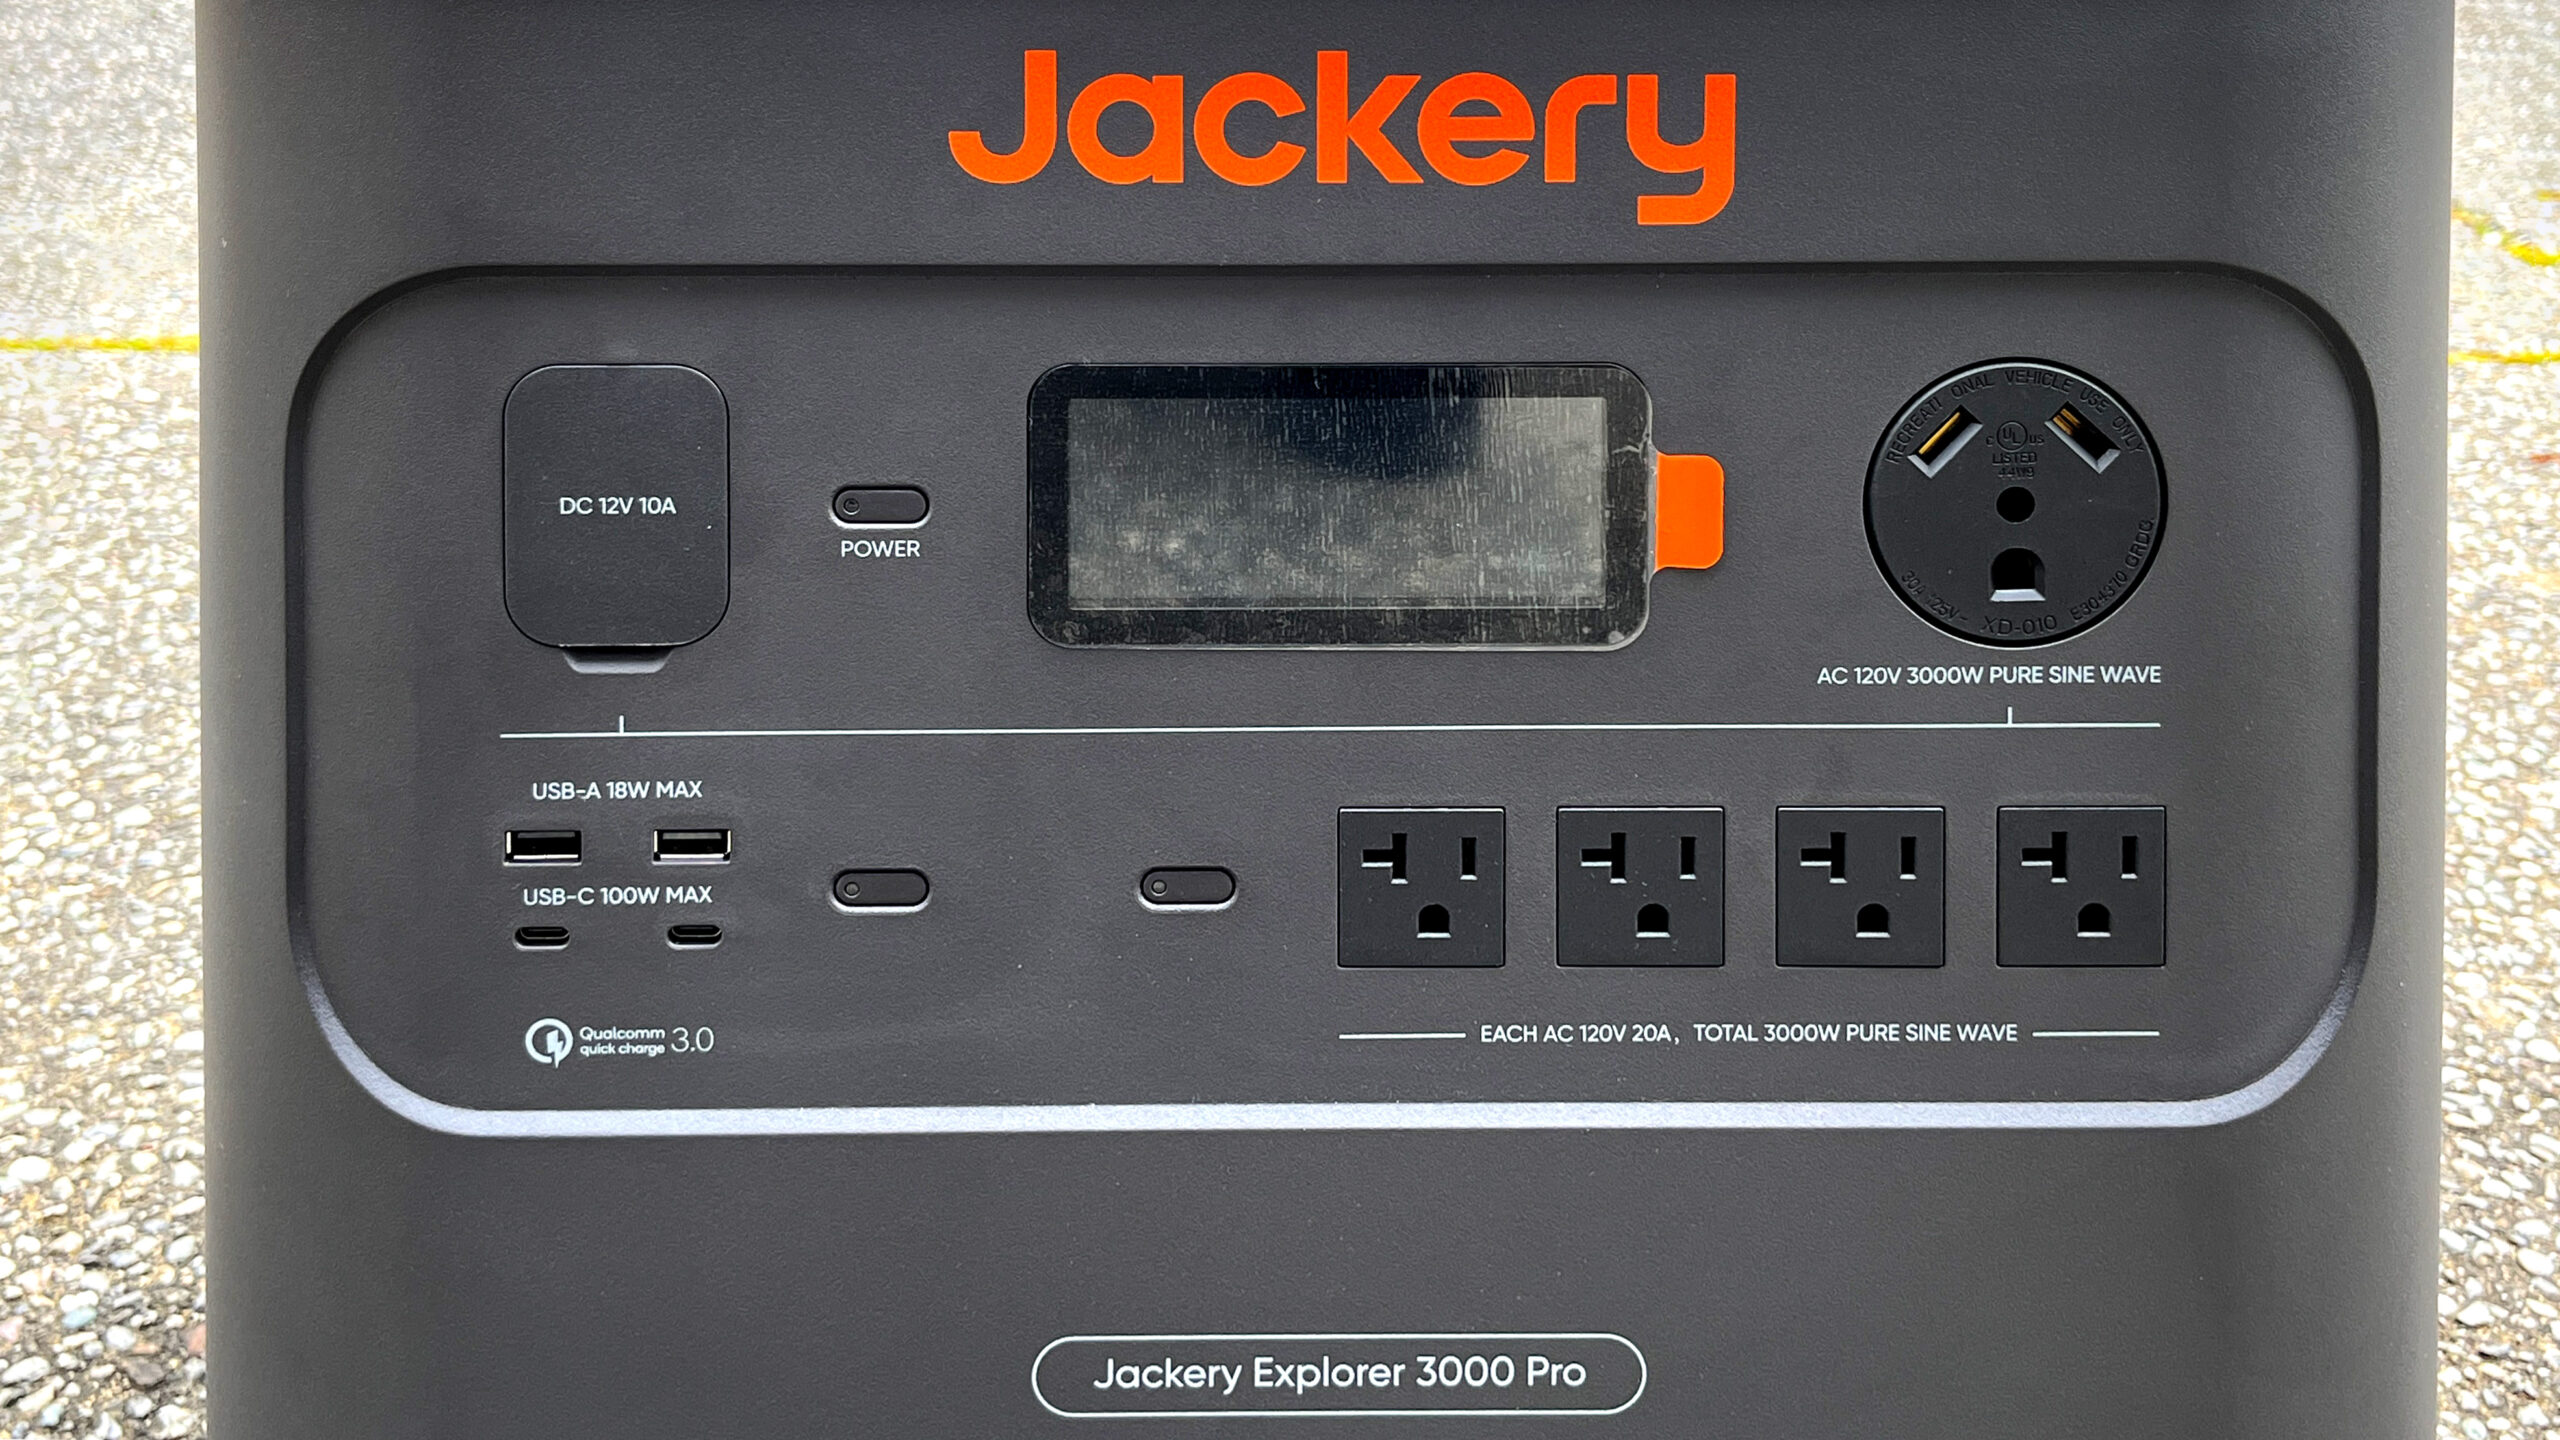 Jackery Explorer 3000 front view